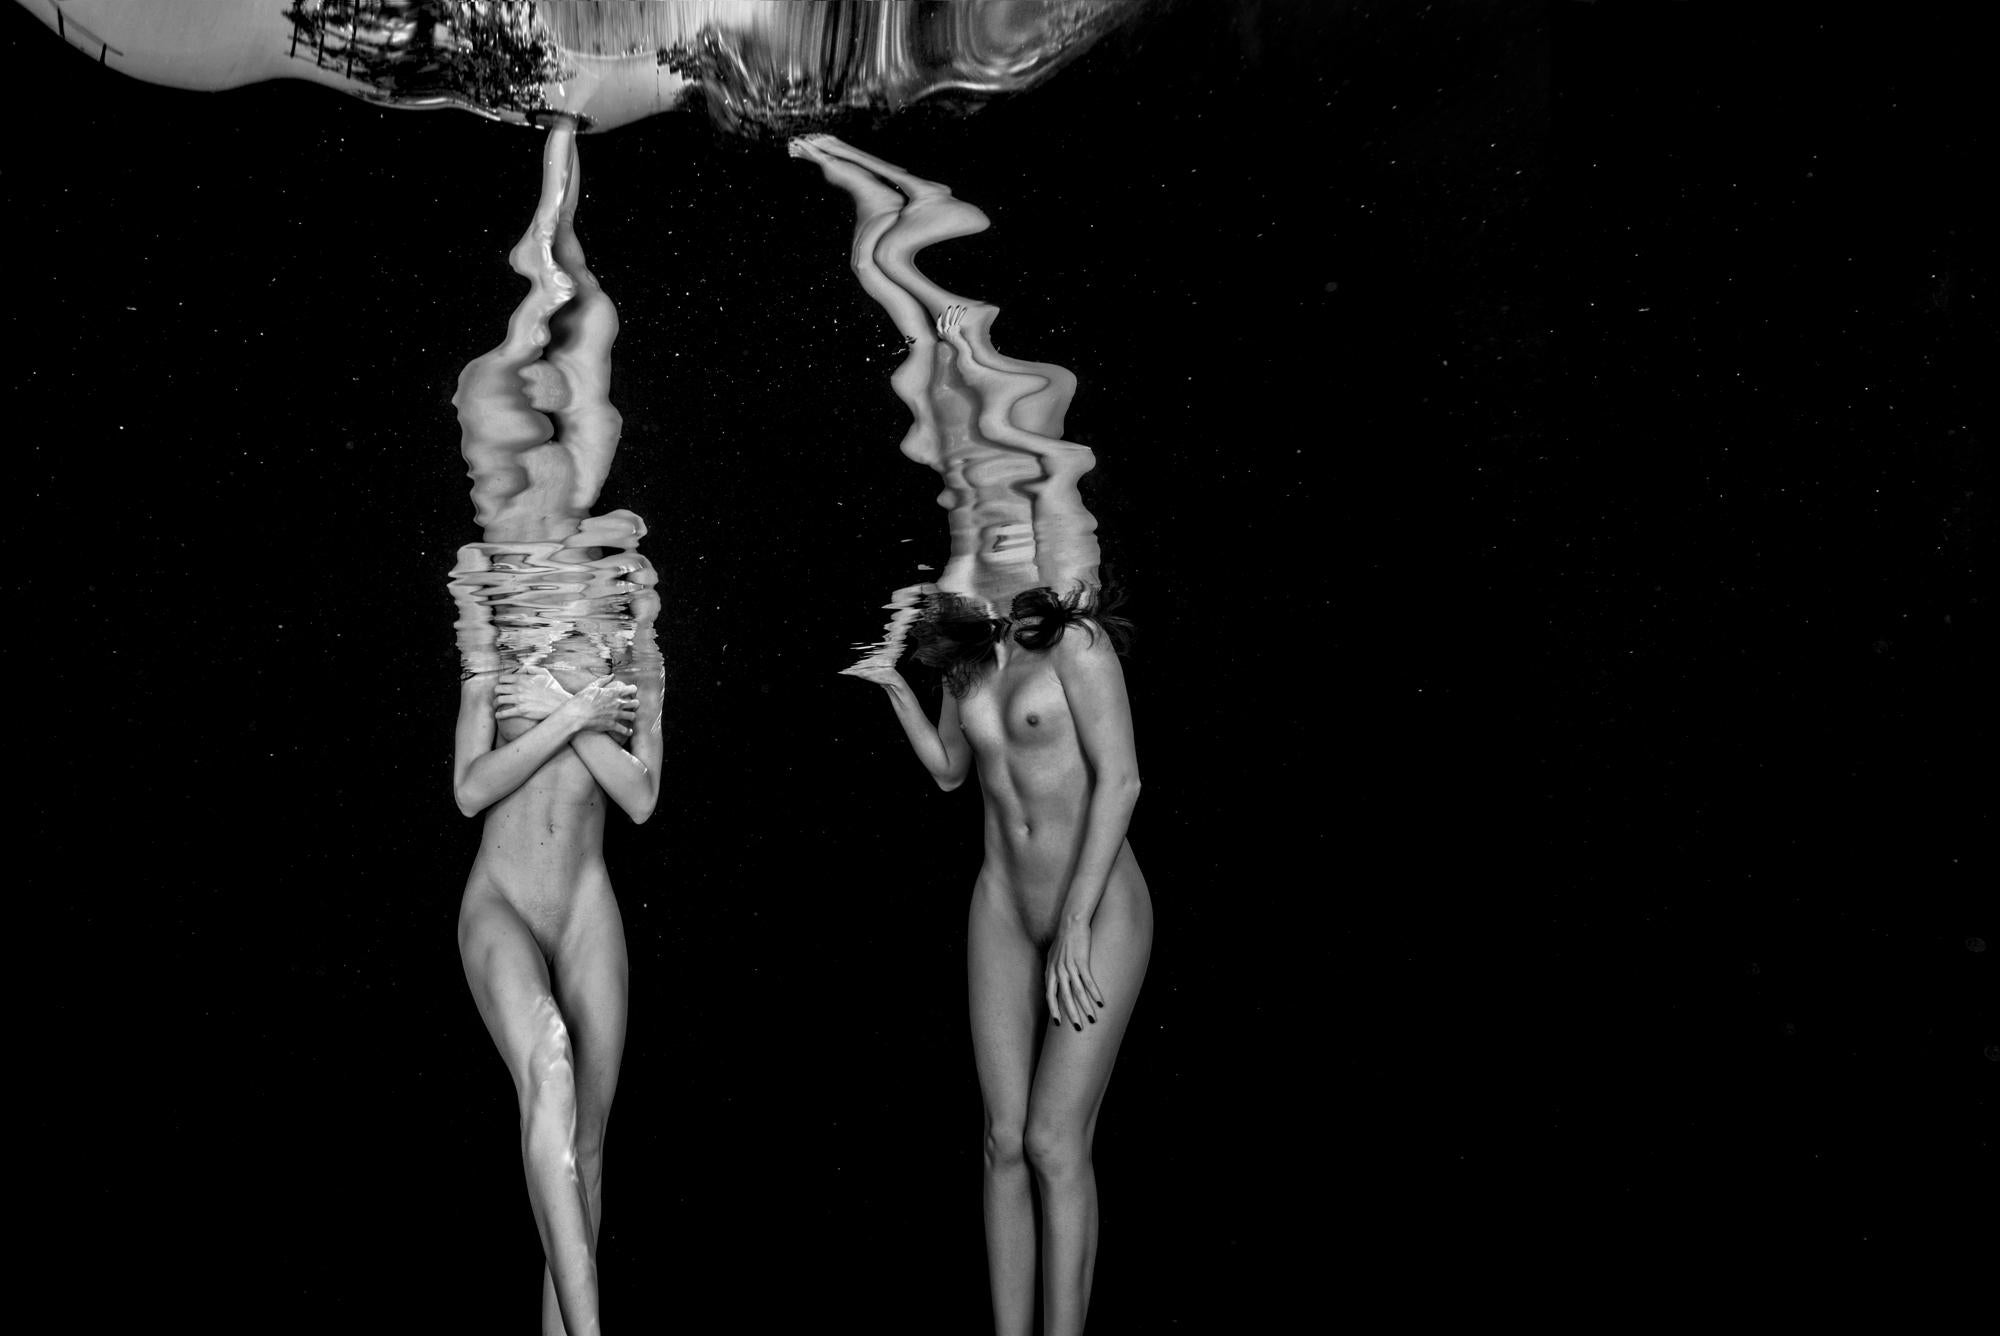 Small Talk - underwater black & white nude photograph - archival pigment 24x35"